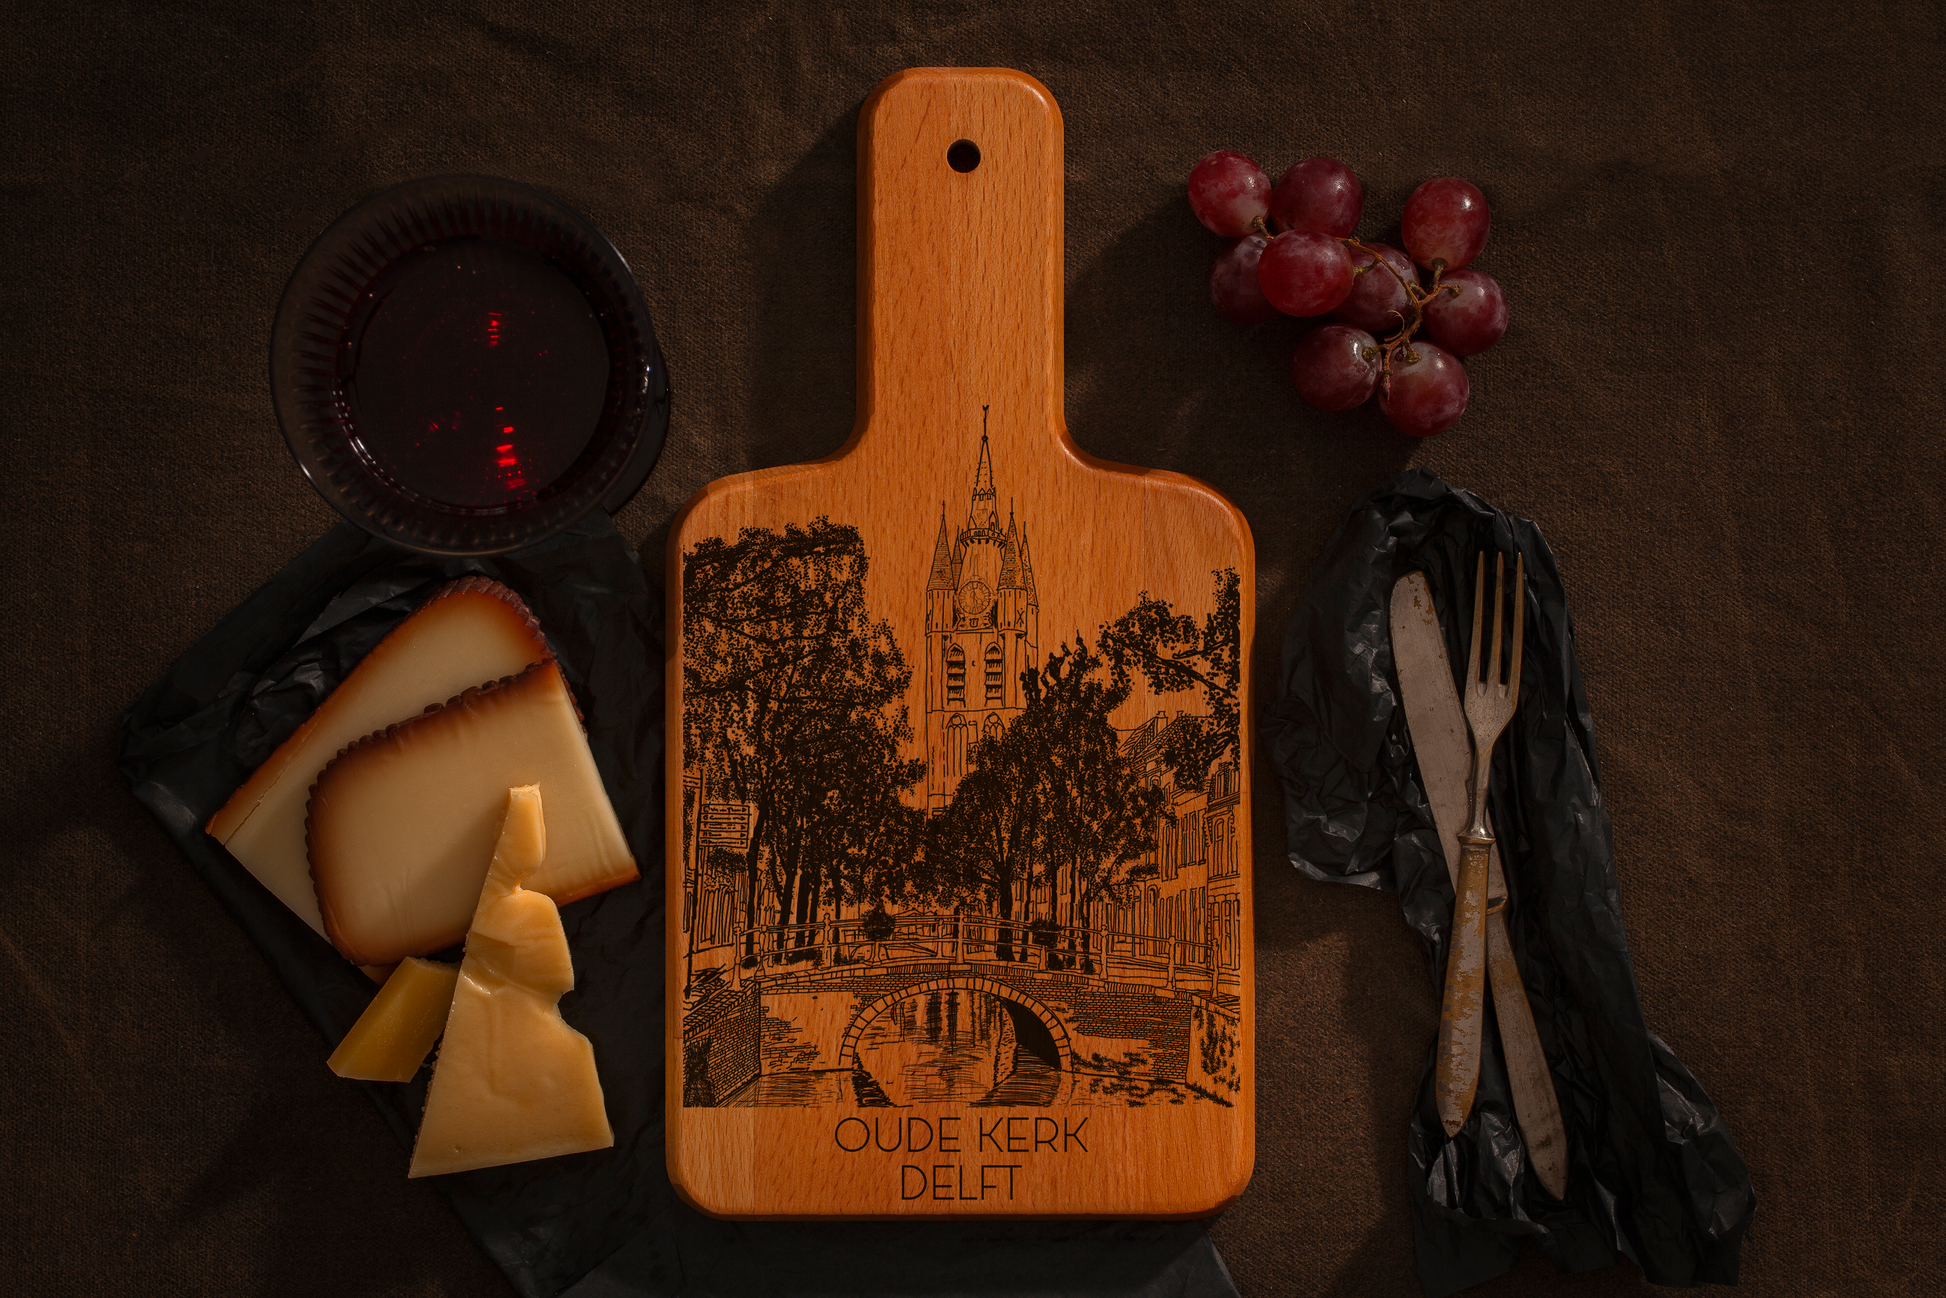 Delft, Oude Kerk, cheese board, up